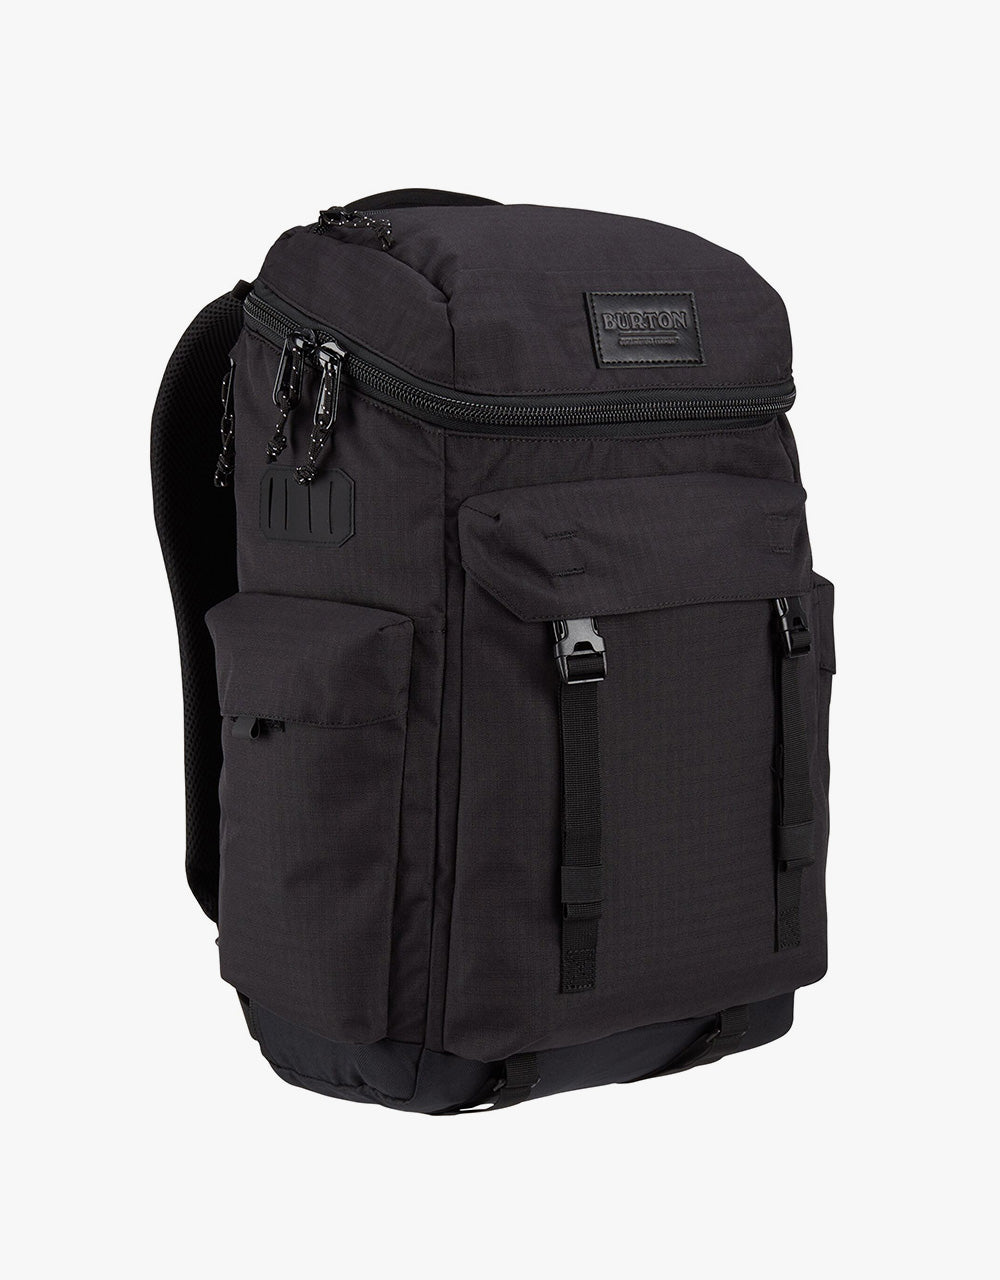 Burton Annex 2.0 28L Backpack - True Black Triple Ripstop